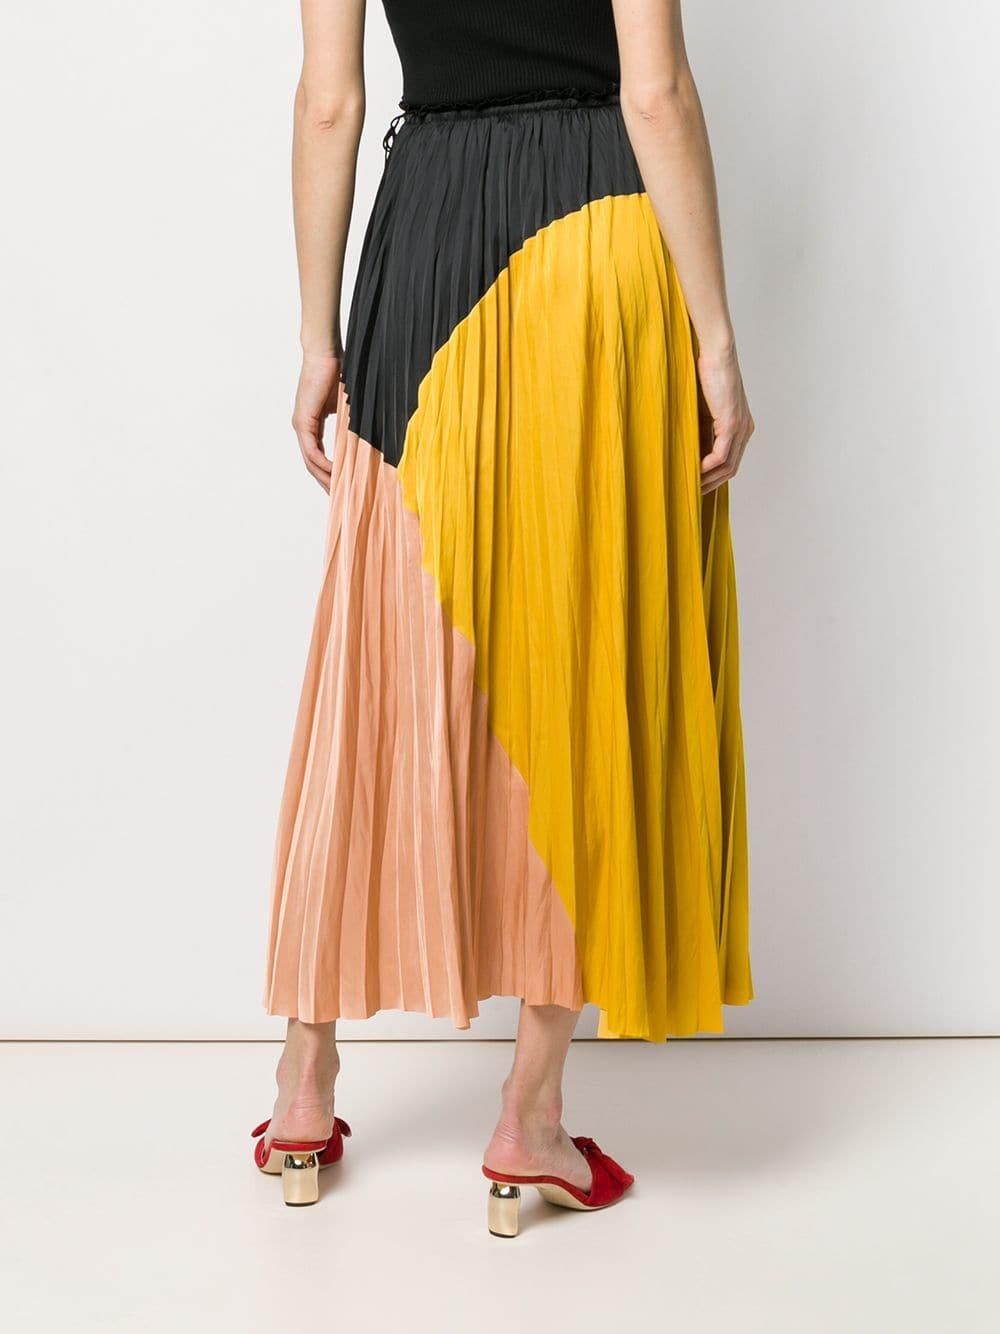 Ulla Johnson Colour Block Pleated Skirt in Black | Lyst